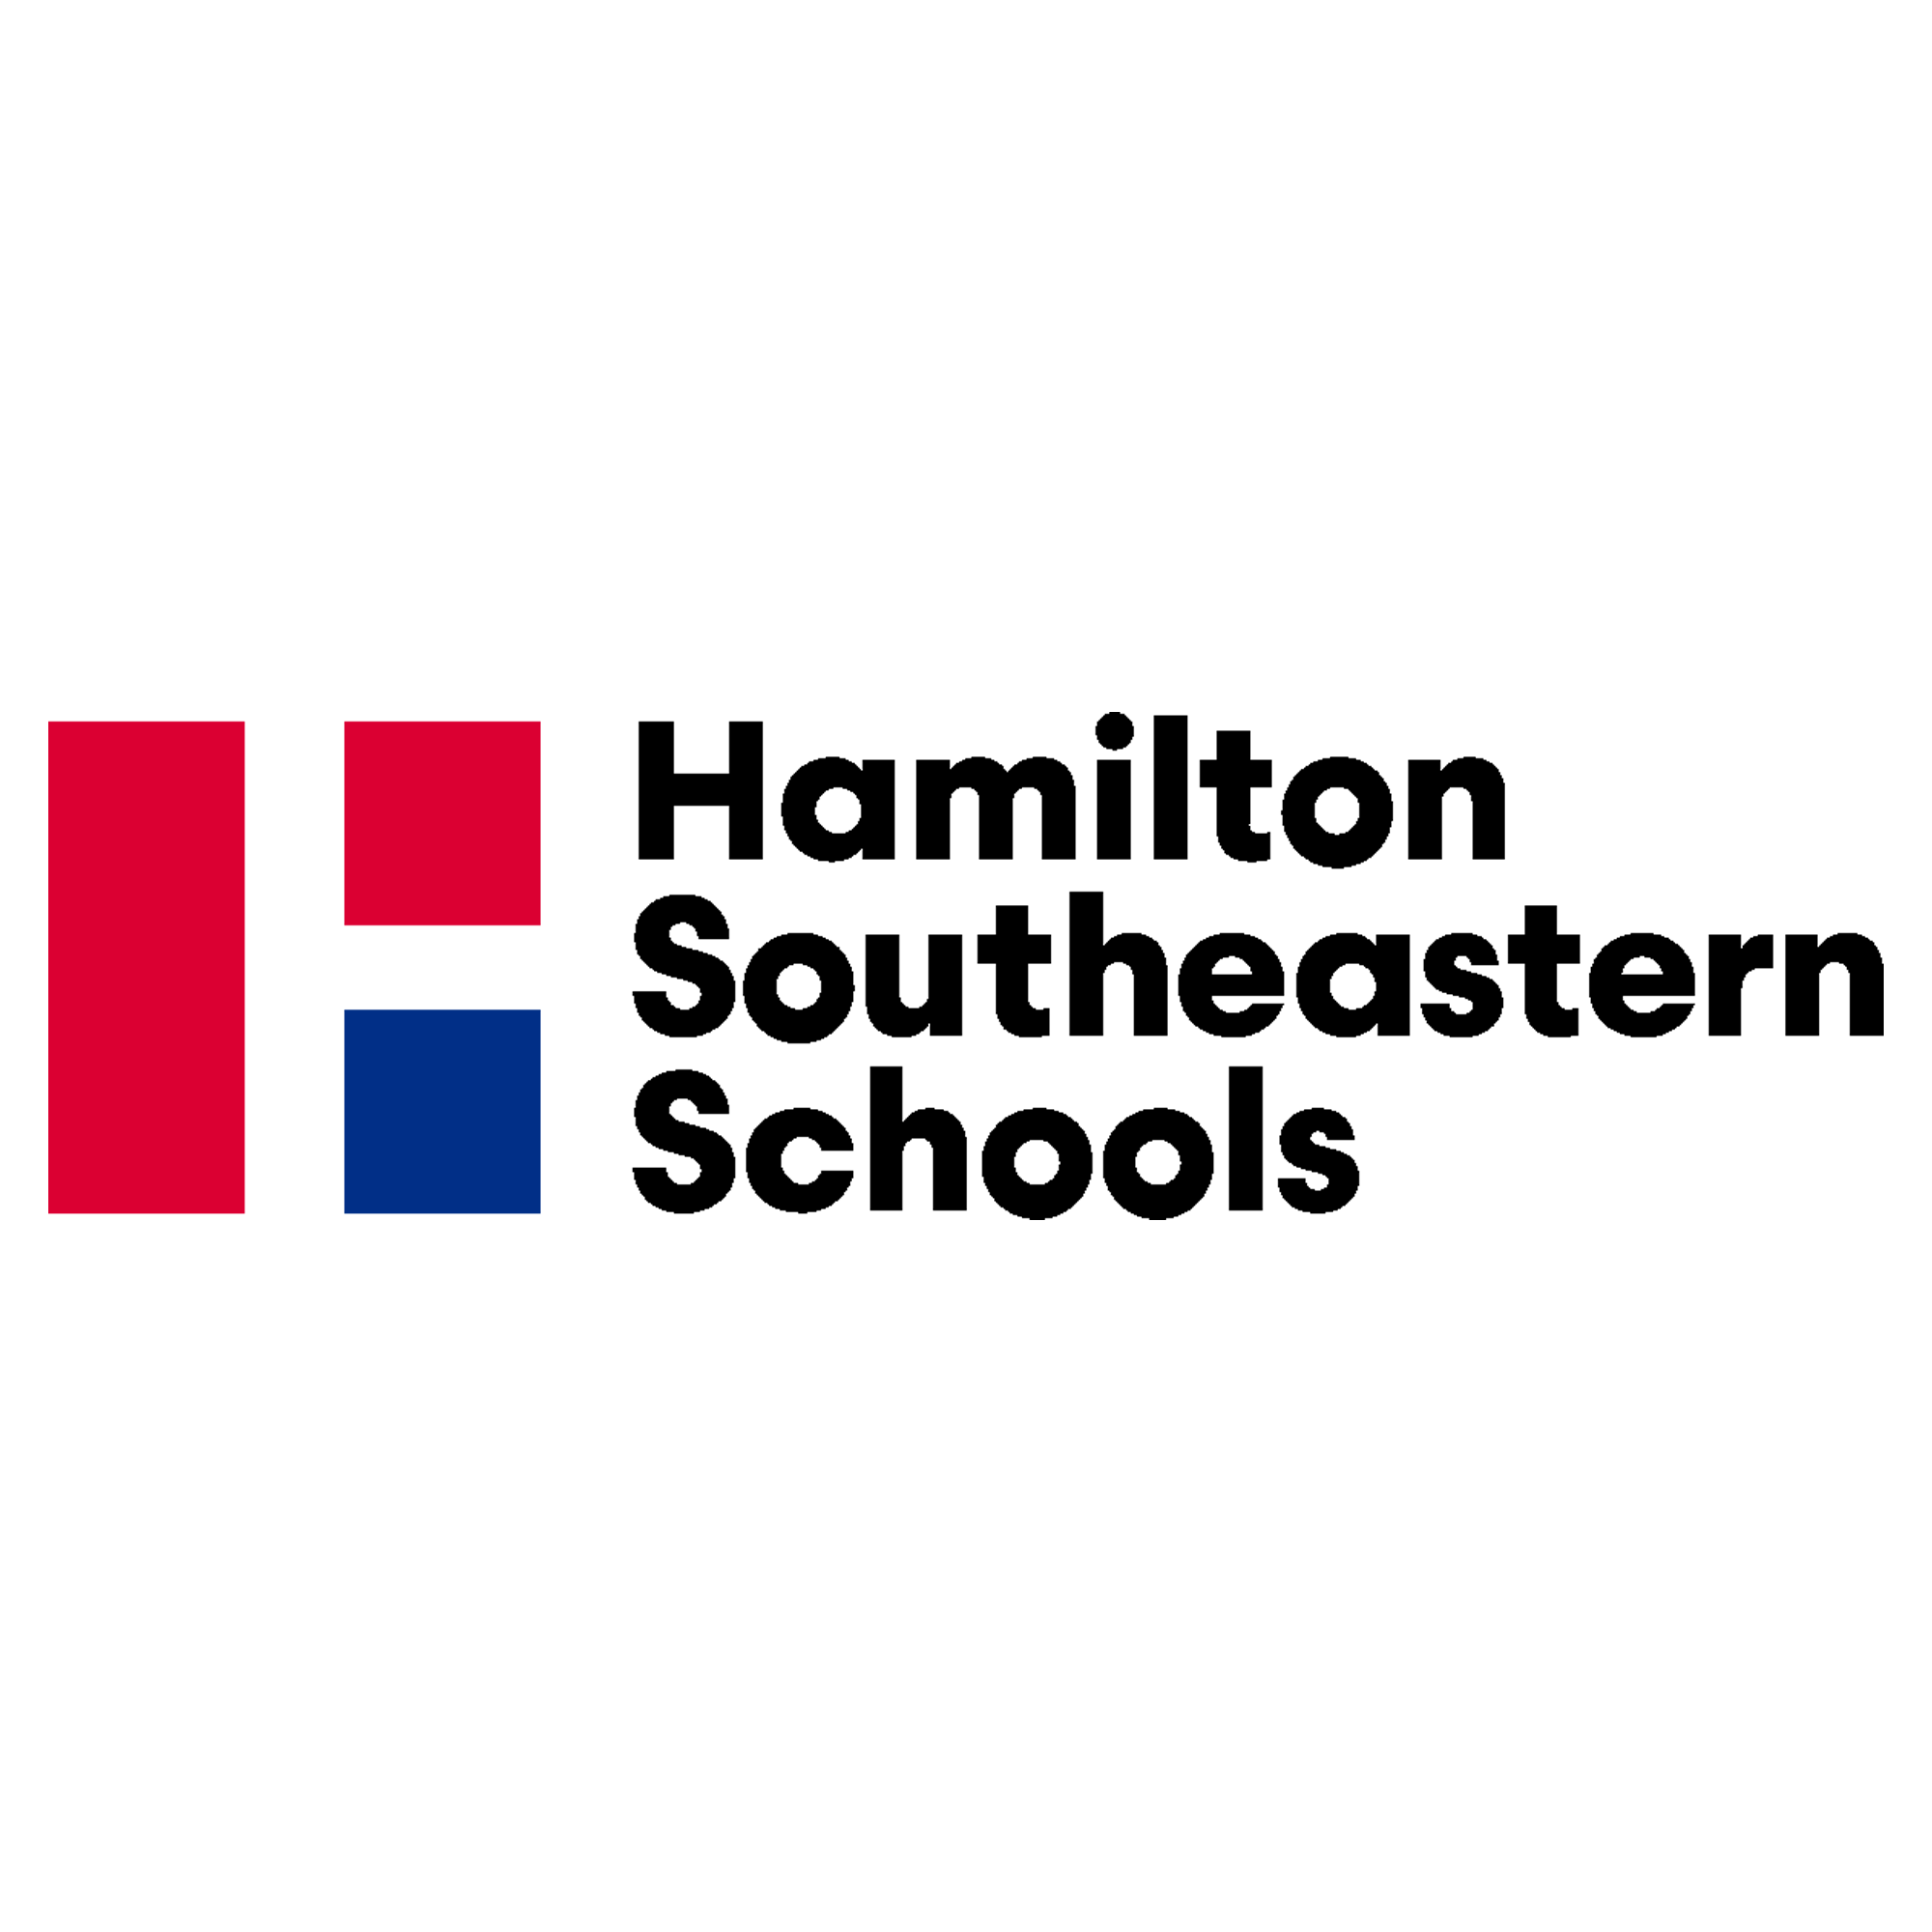 HAMILTON SOUTHEASTERN SCHOOLS